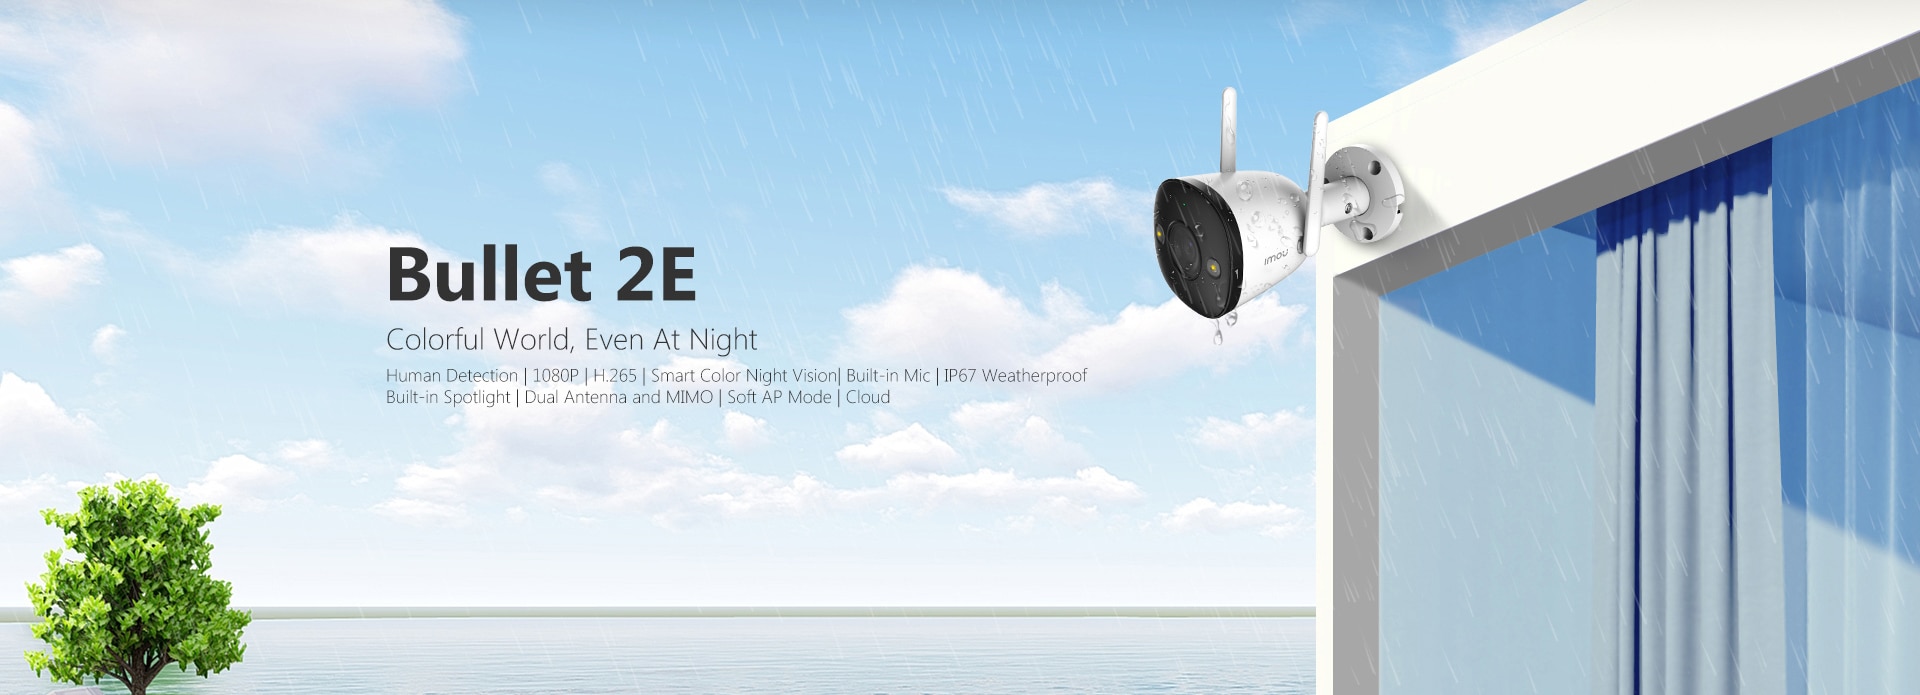 Color night vision wifi security cameras Dahua Imou 2E 4MP for outdoor € 80,21